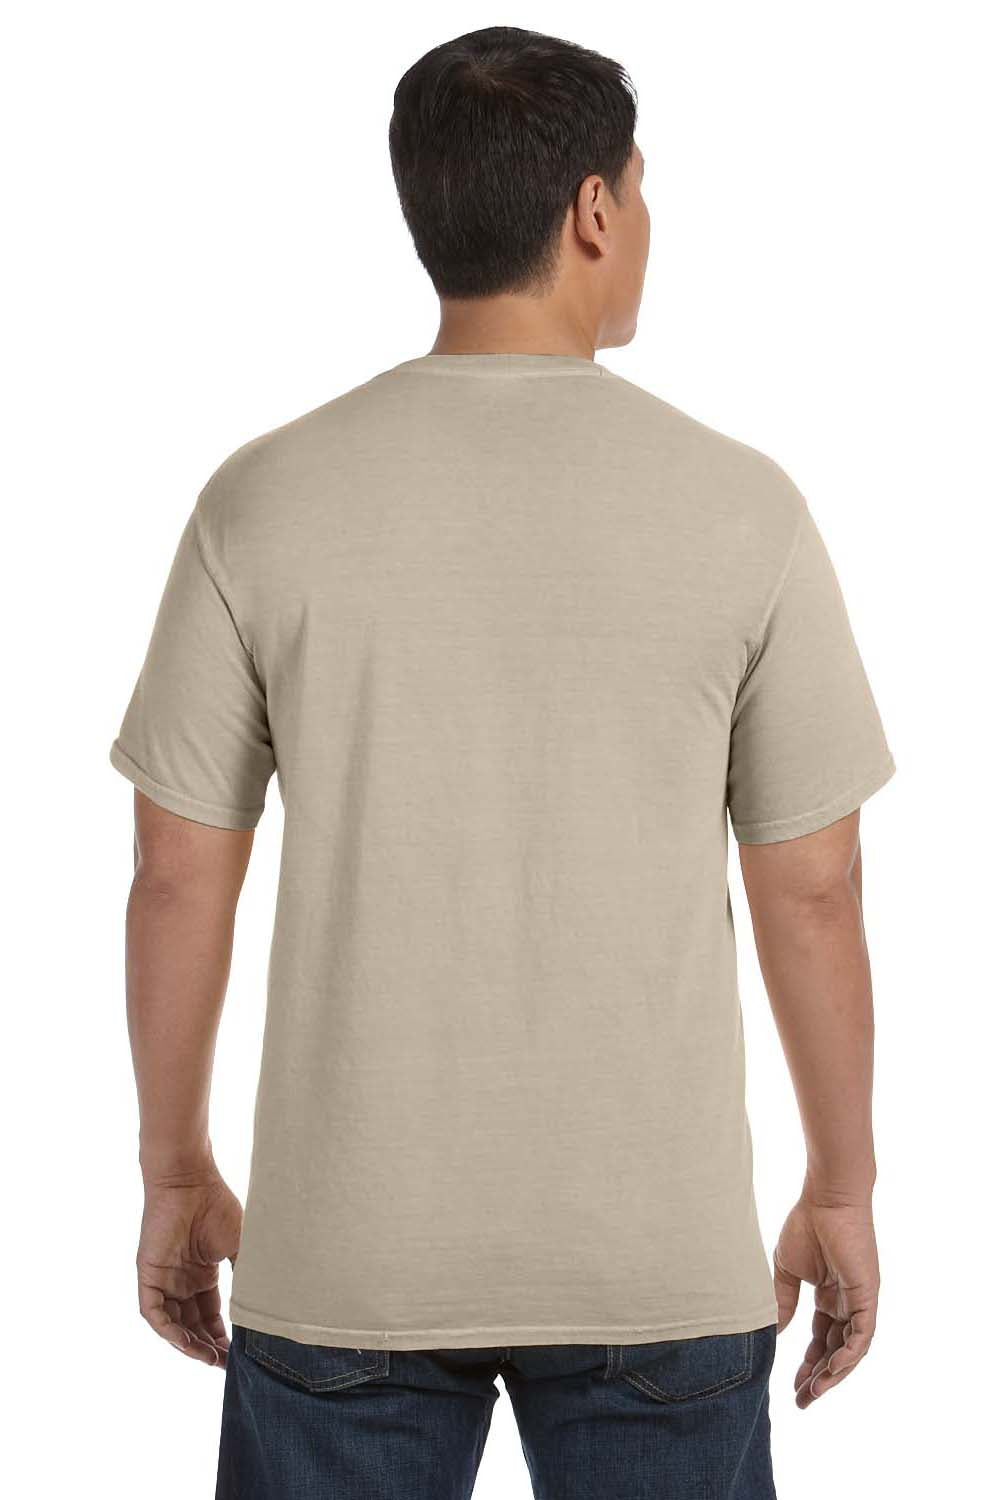 Comfort Colors C1717 Mens Short Sleeve Crewneck T-Shirt Sandstone Brown Back